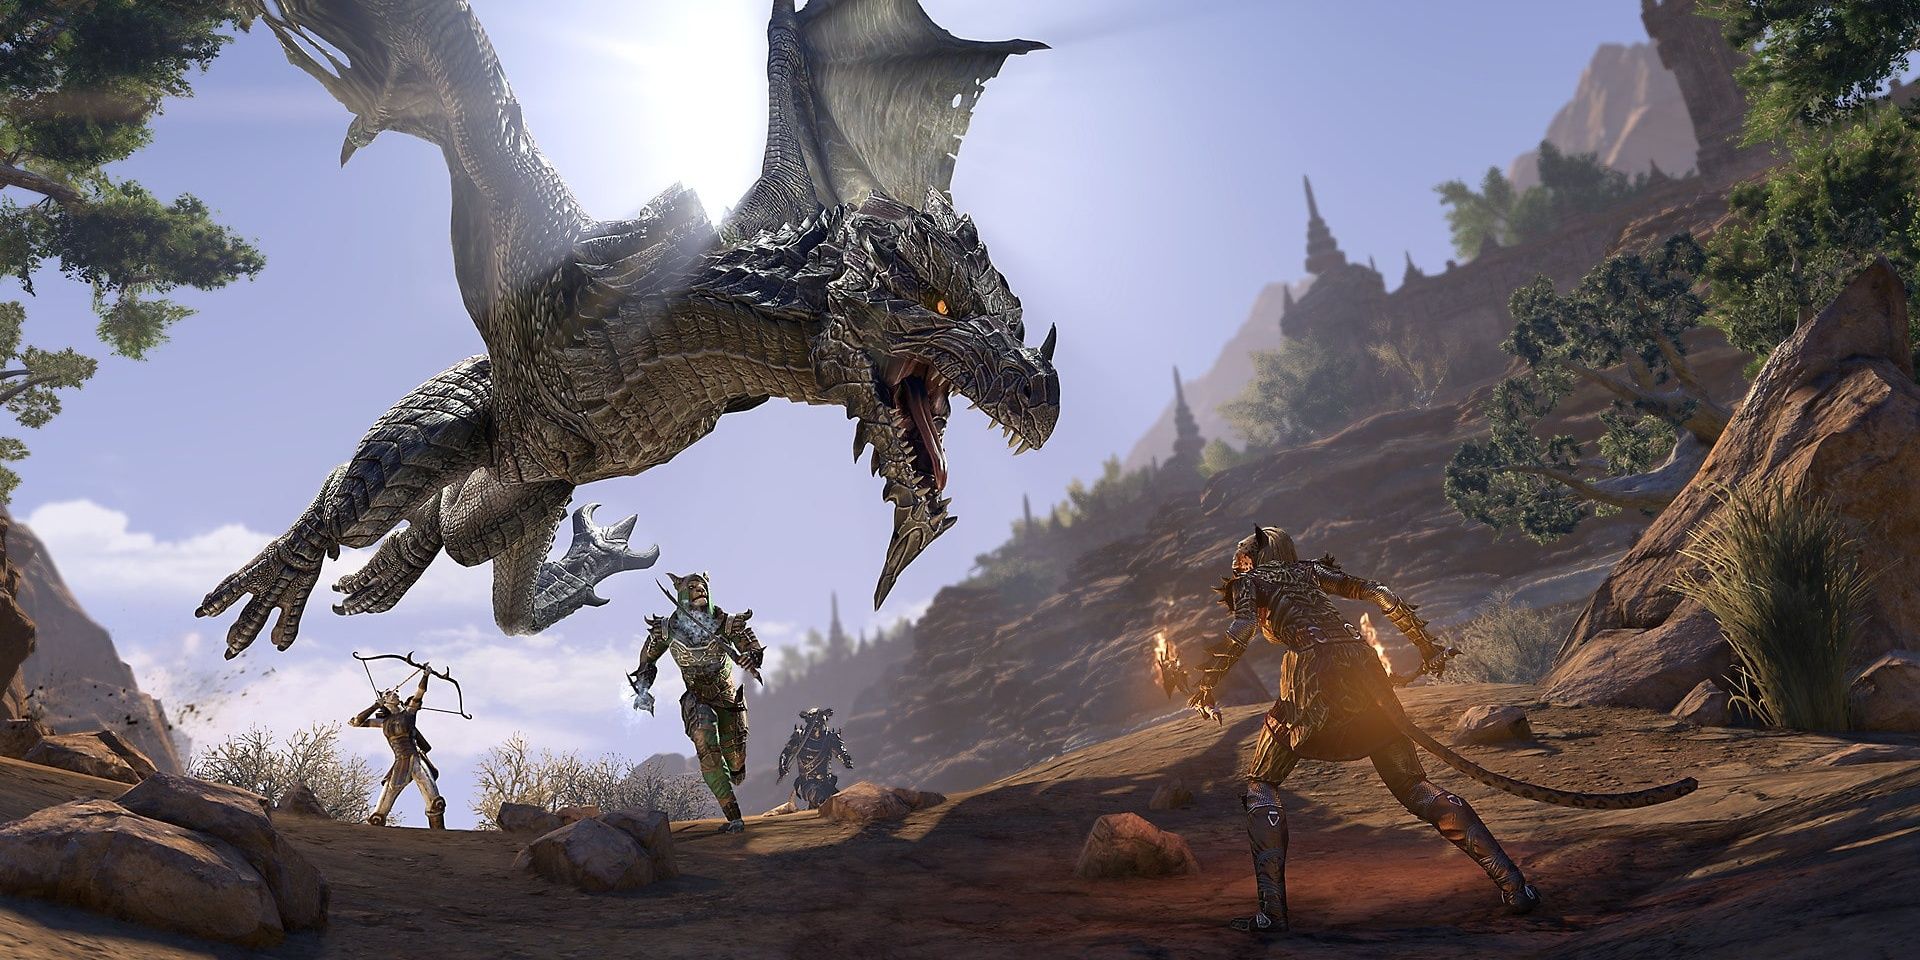 Dragon Attack From The Elder Scrolls Online